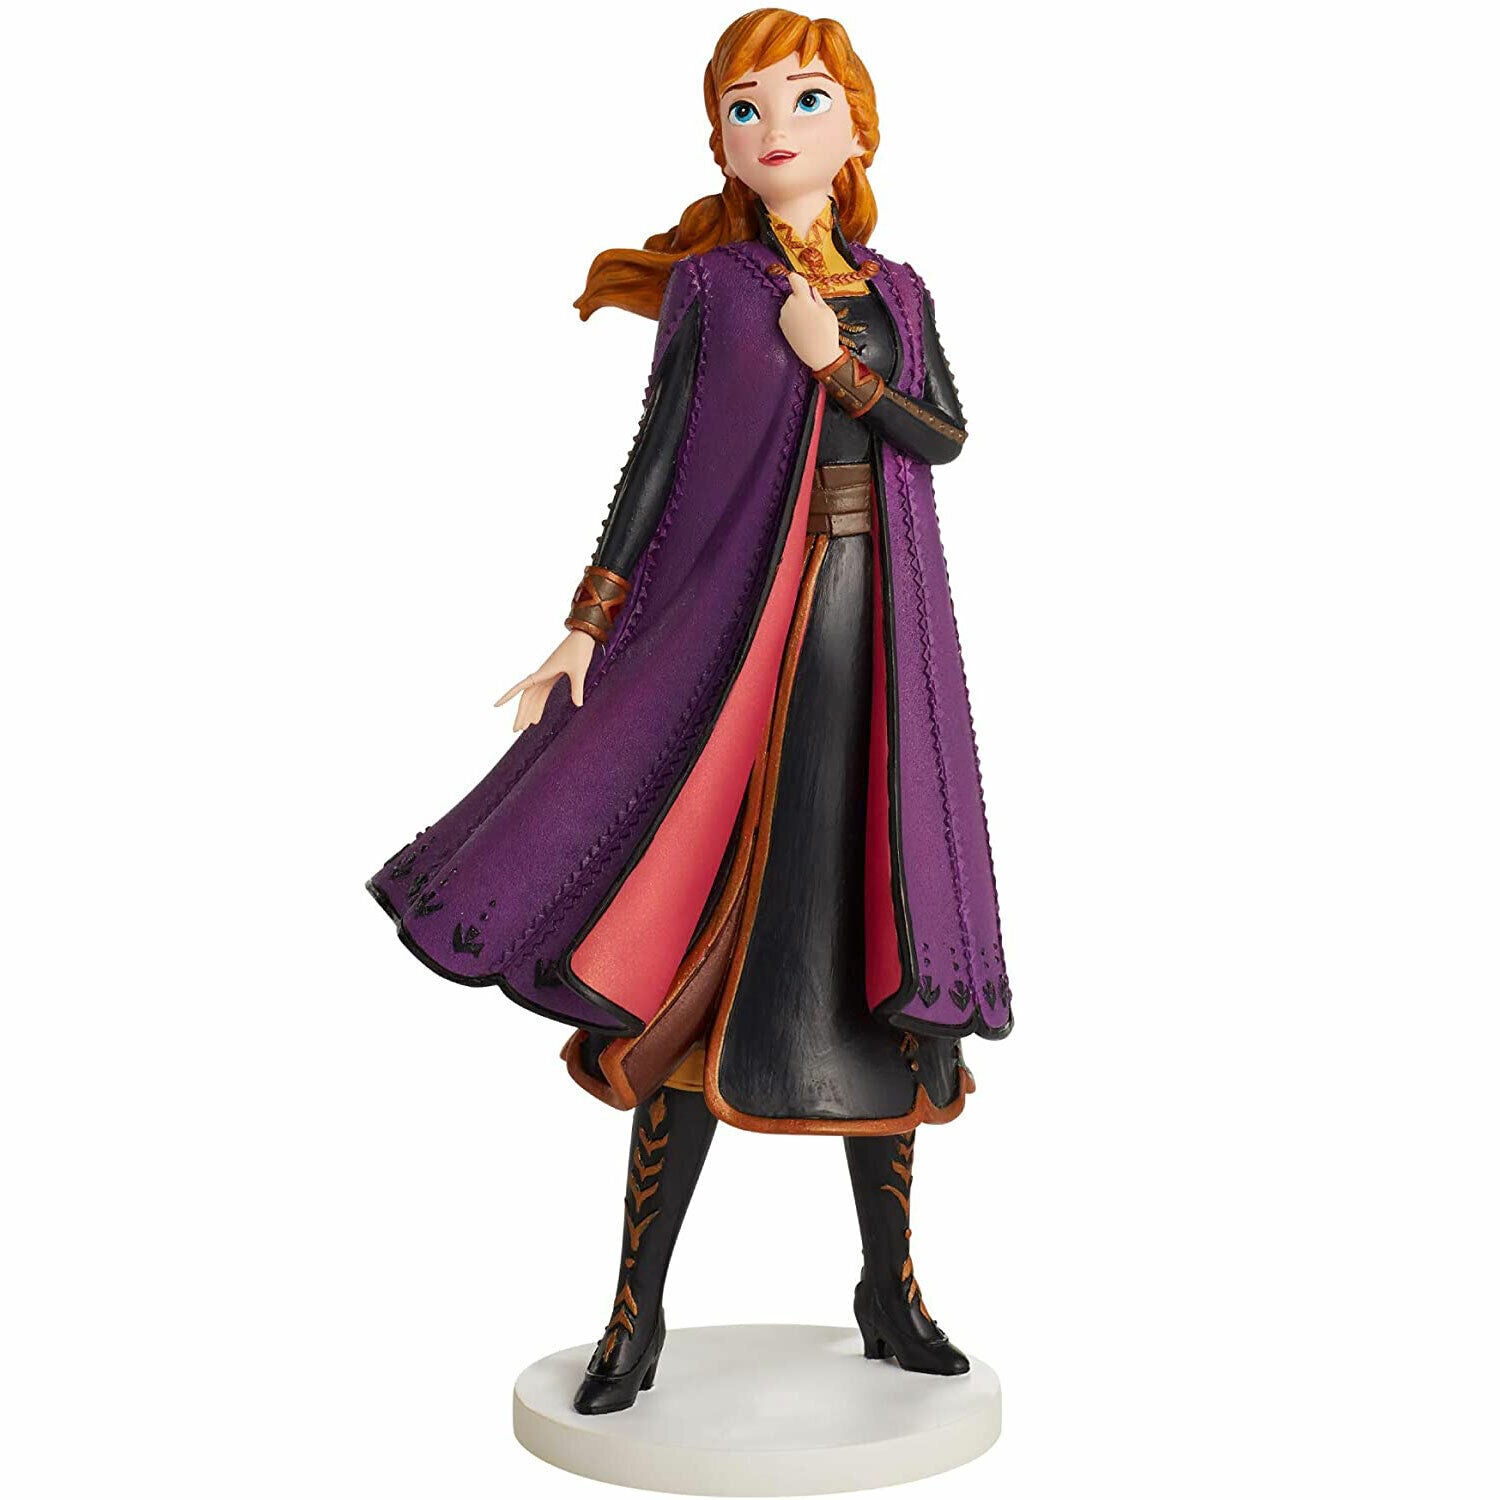 New Disney Showcase Anna Figurine from Frozen - Collectible